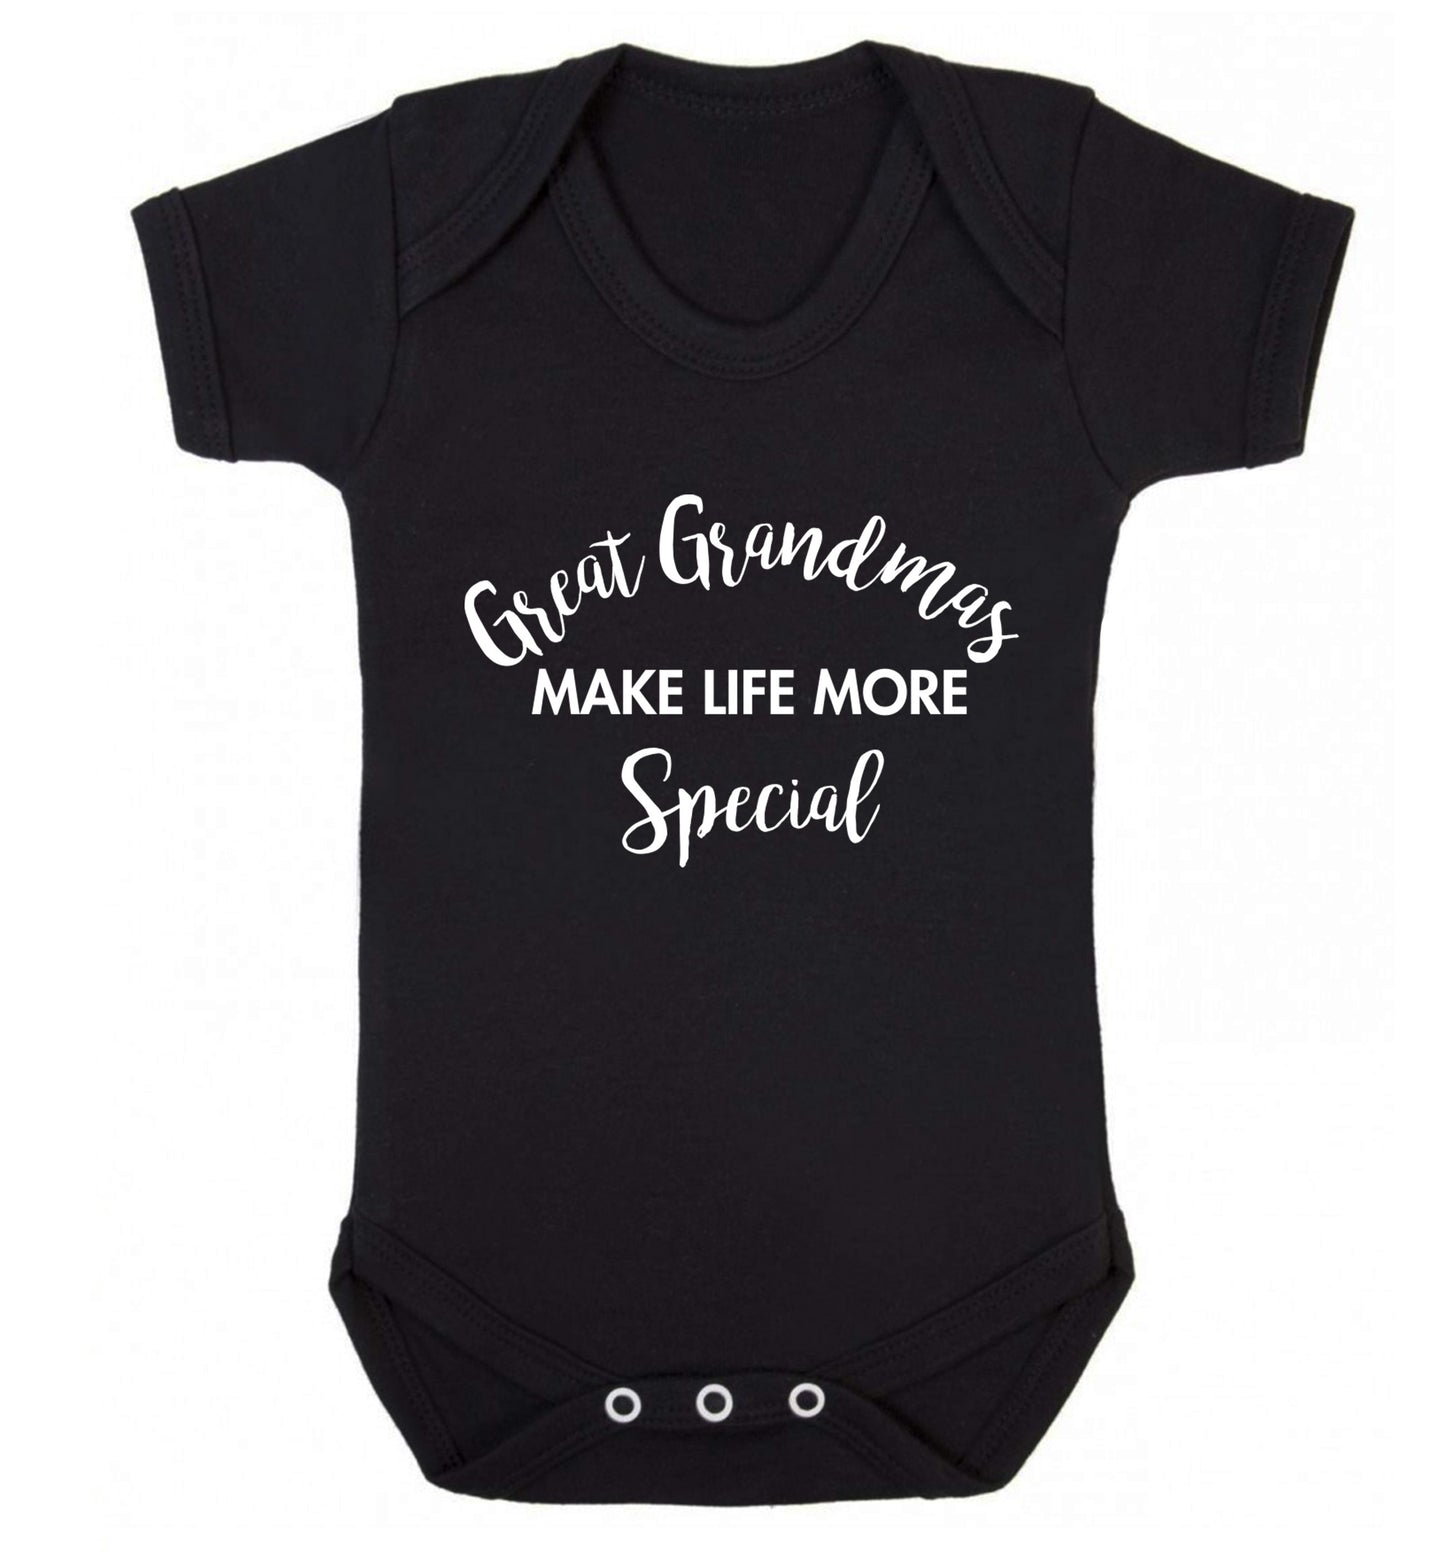 Great Grandmas make life more special Baby Vest black 18-24 months